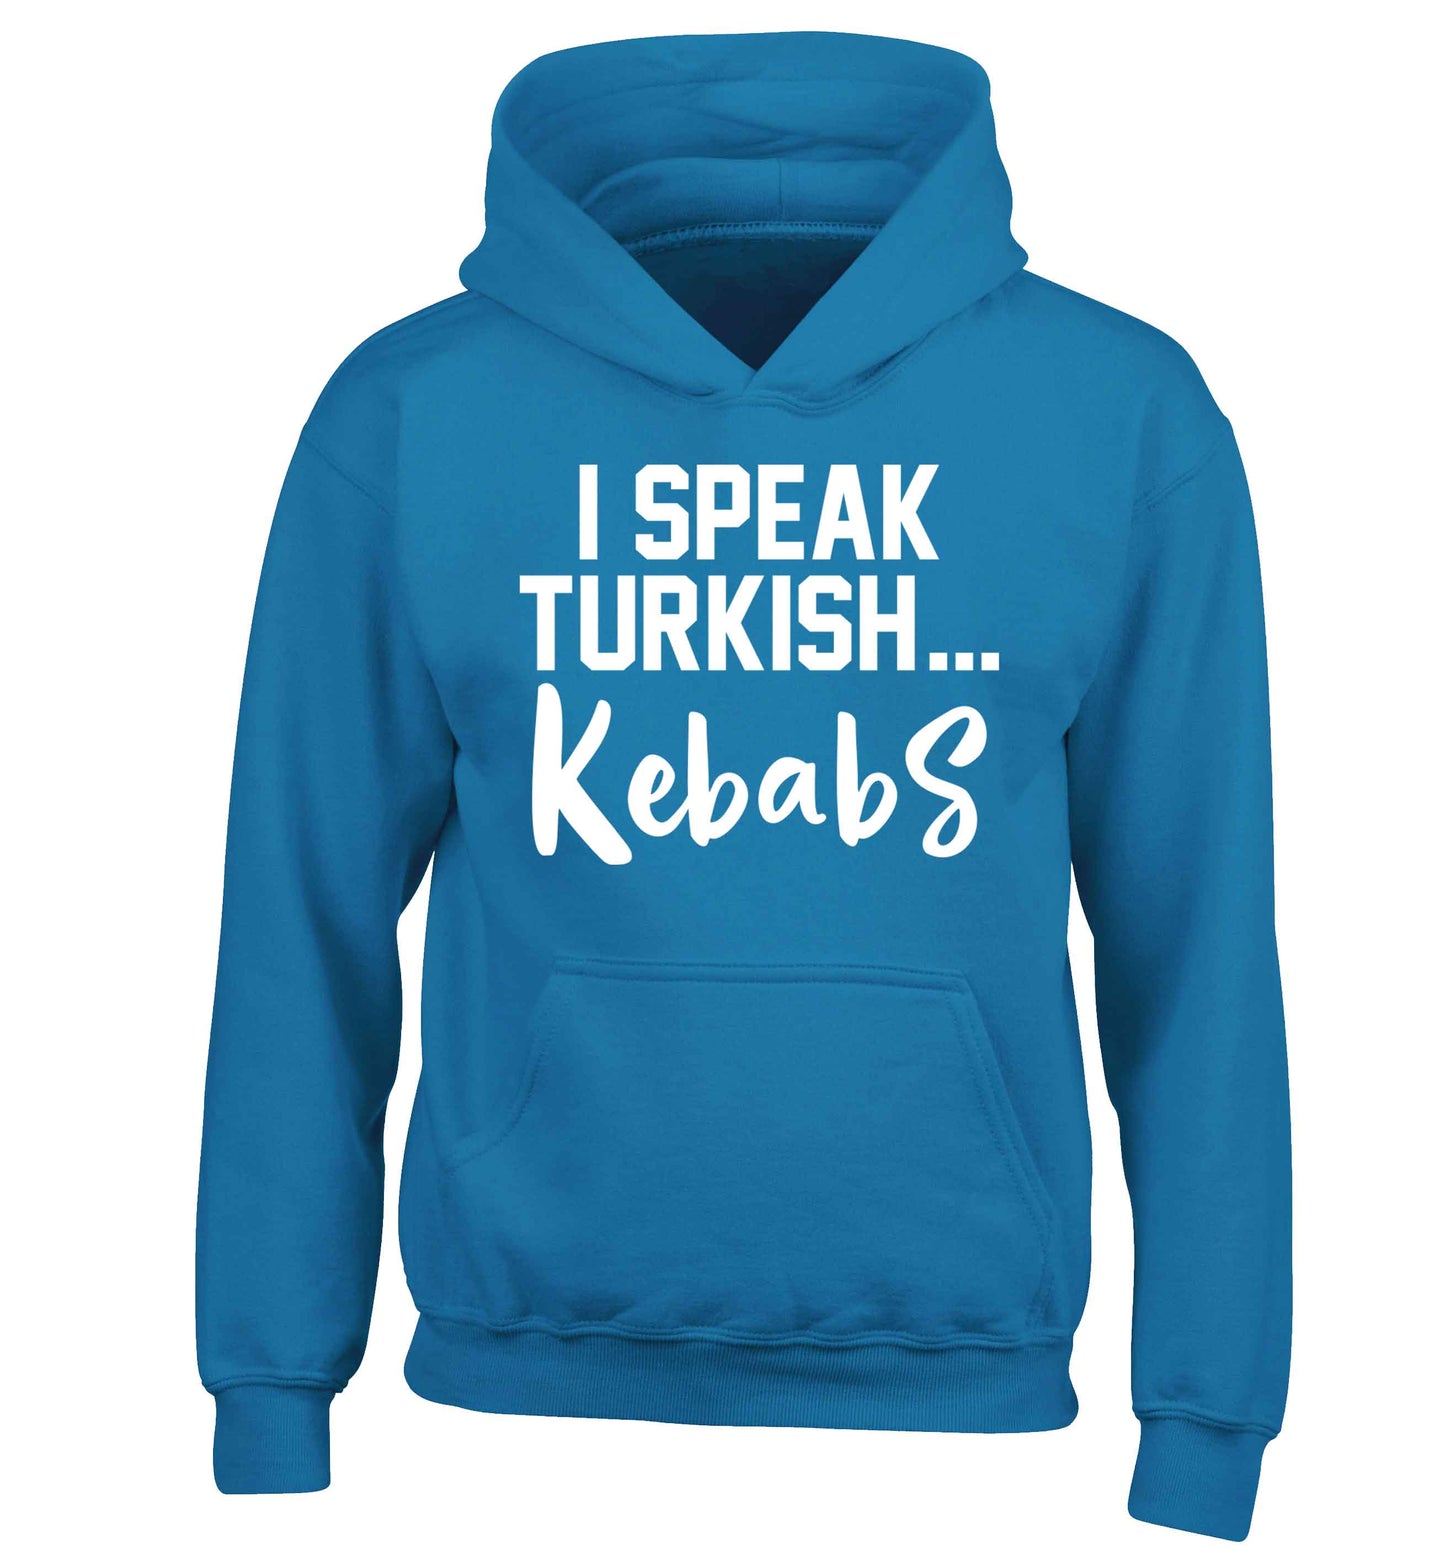 I speak Turkish...kebabs children's blue hoodie 12-13 Years